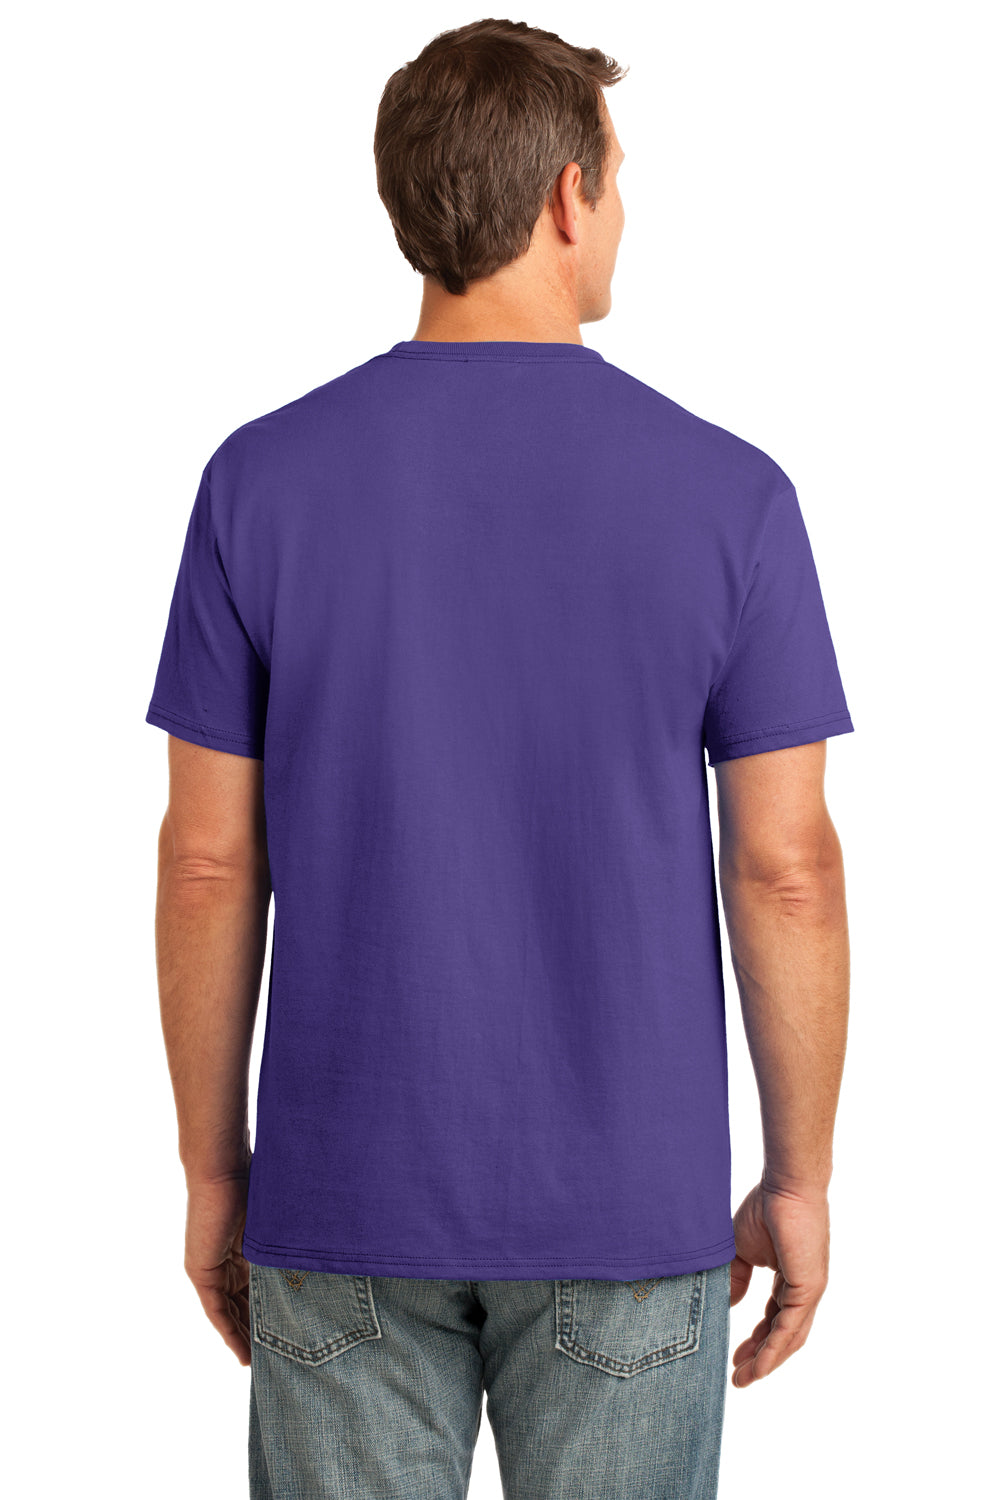 Port & Company PC54P Mens Core Short Sleeve Crewneck T-Shirt w/ Pocket Purple Back